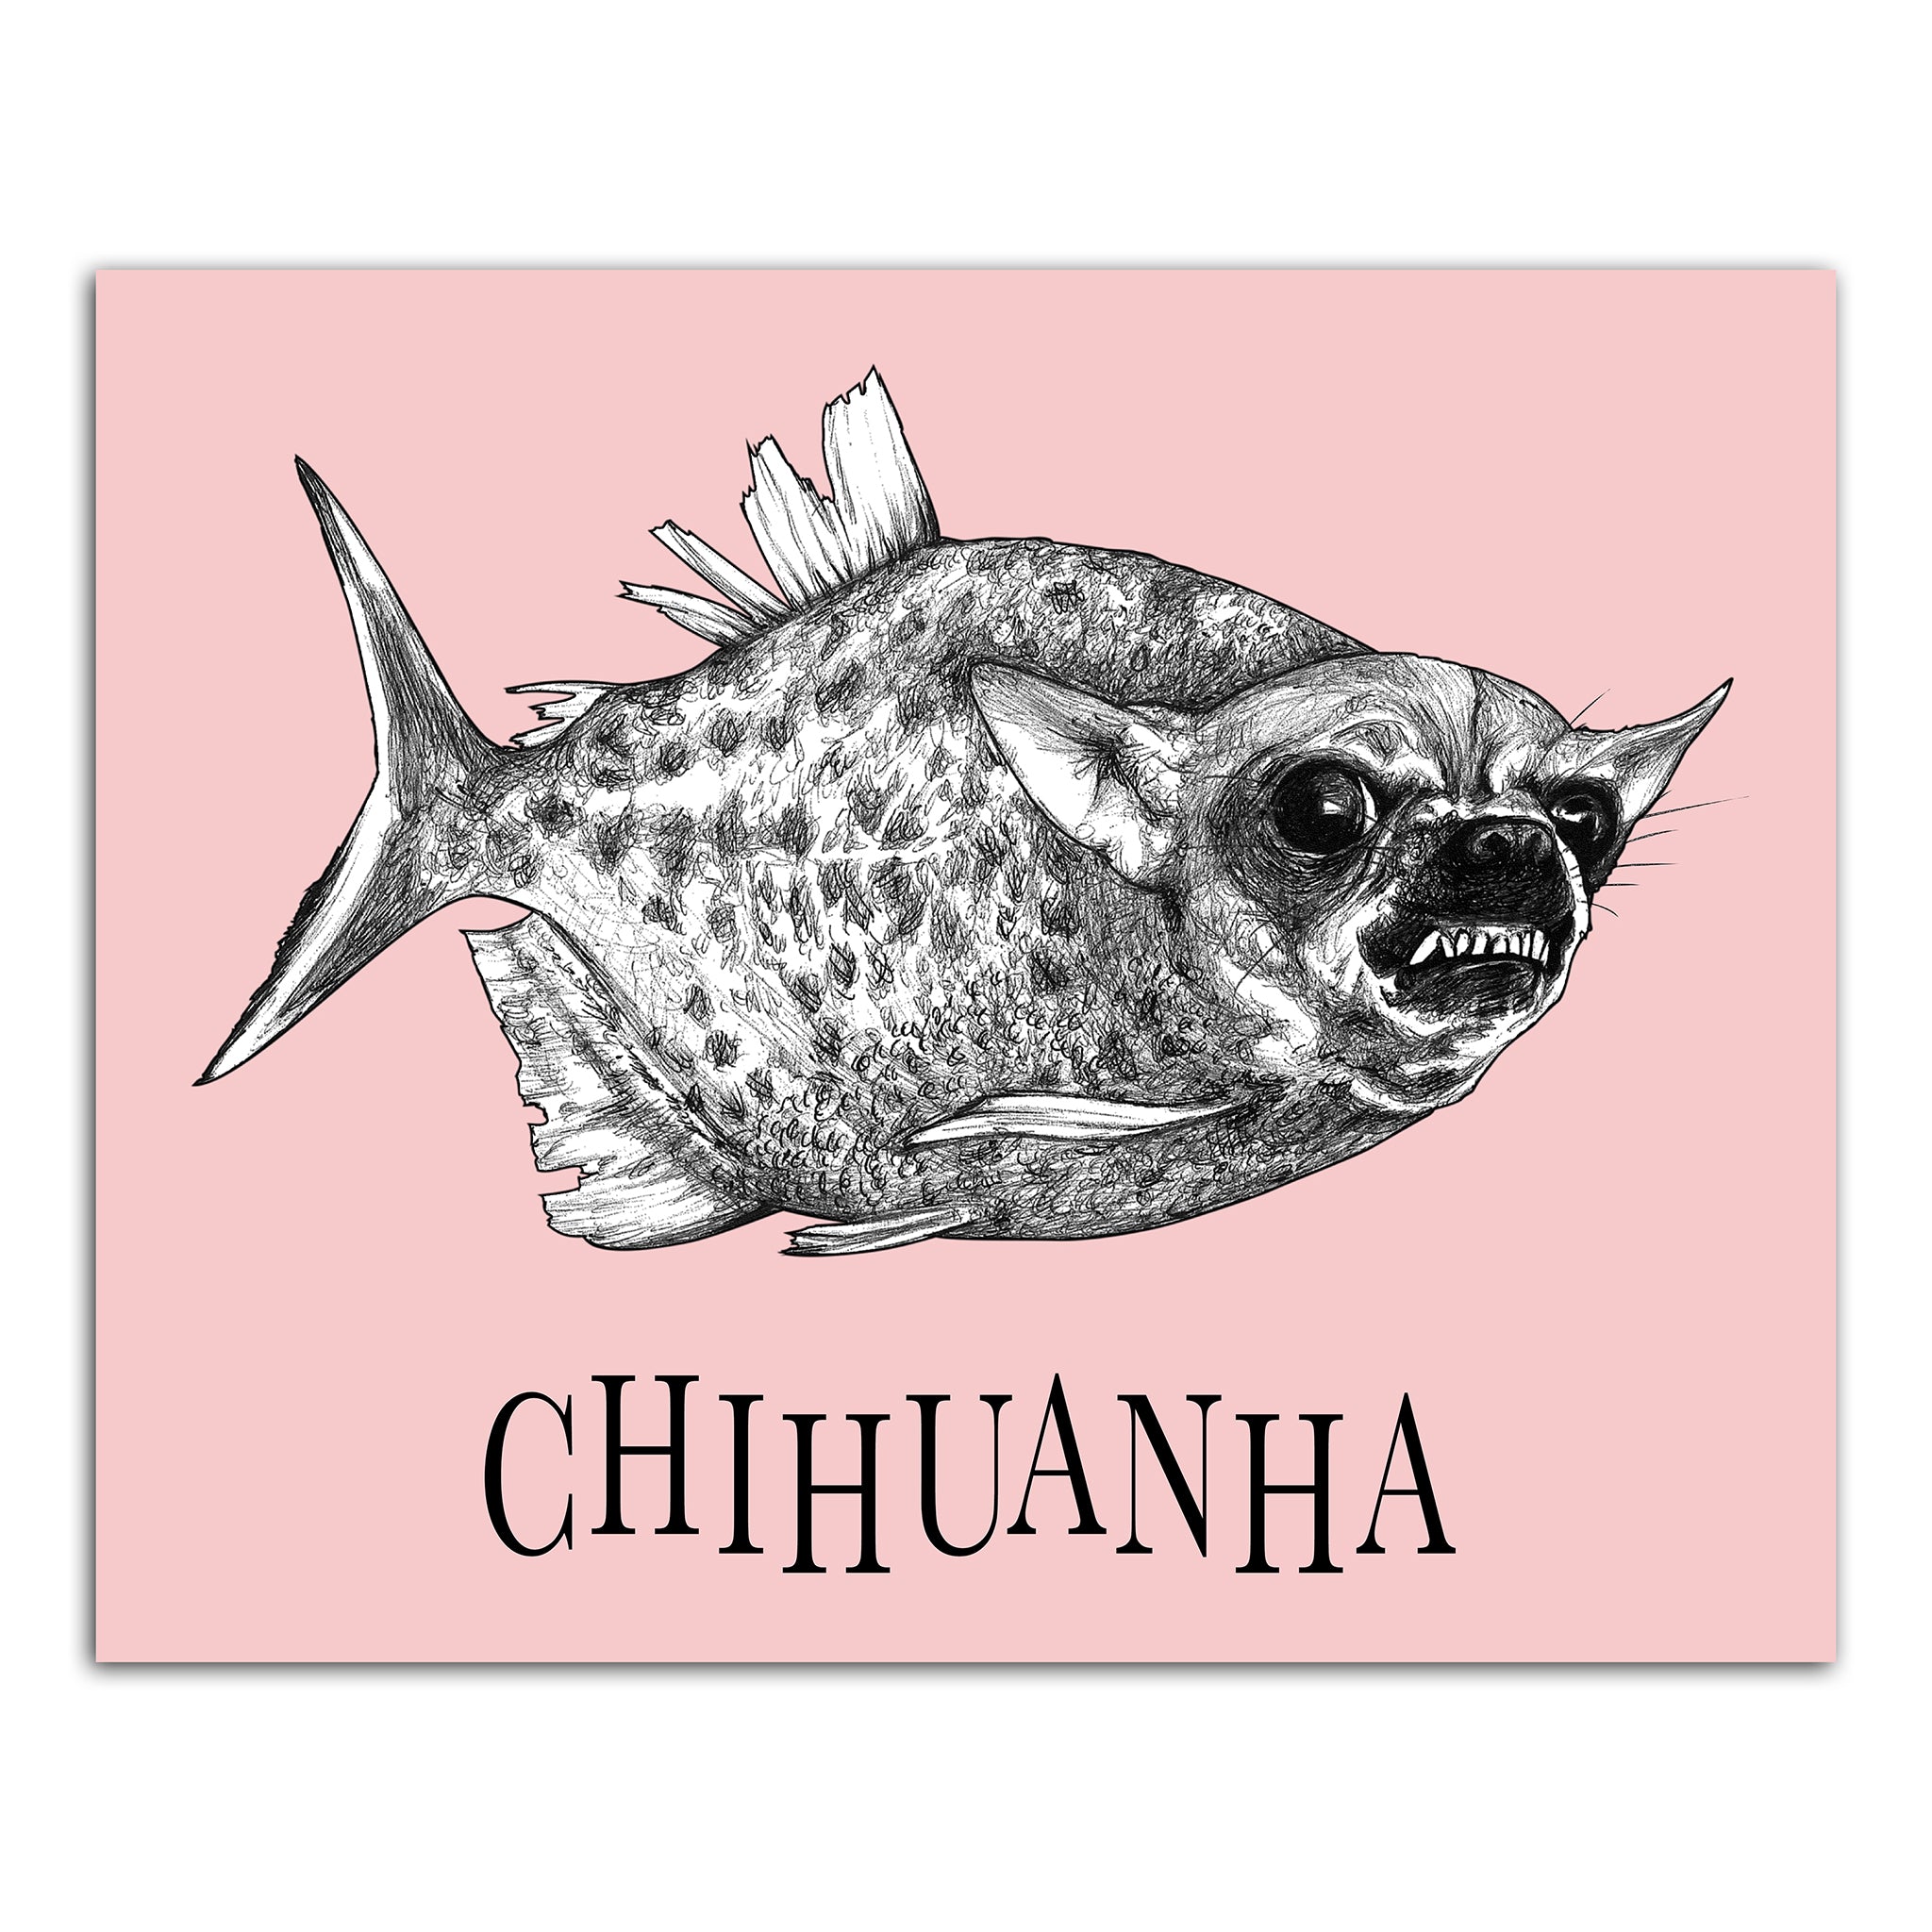 Chihuanha | Piranha + Chihuahua Hybrid Animal | 8x10" Color Print